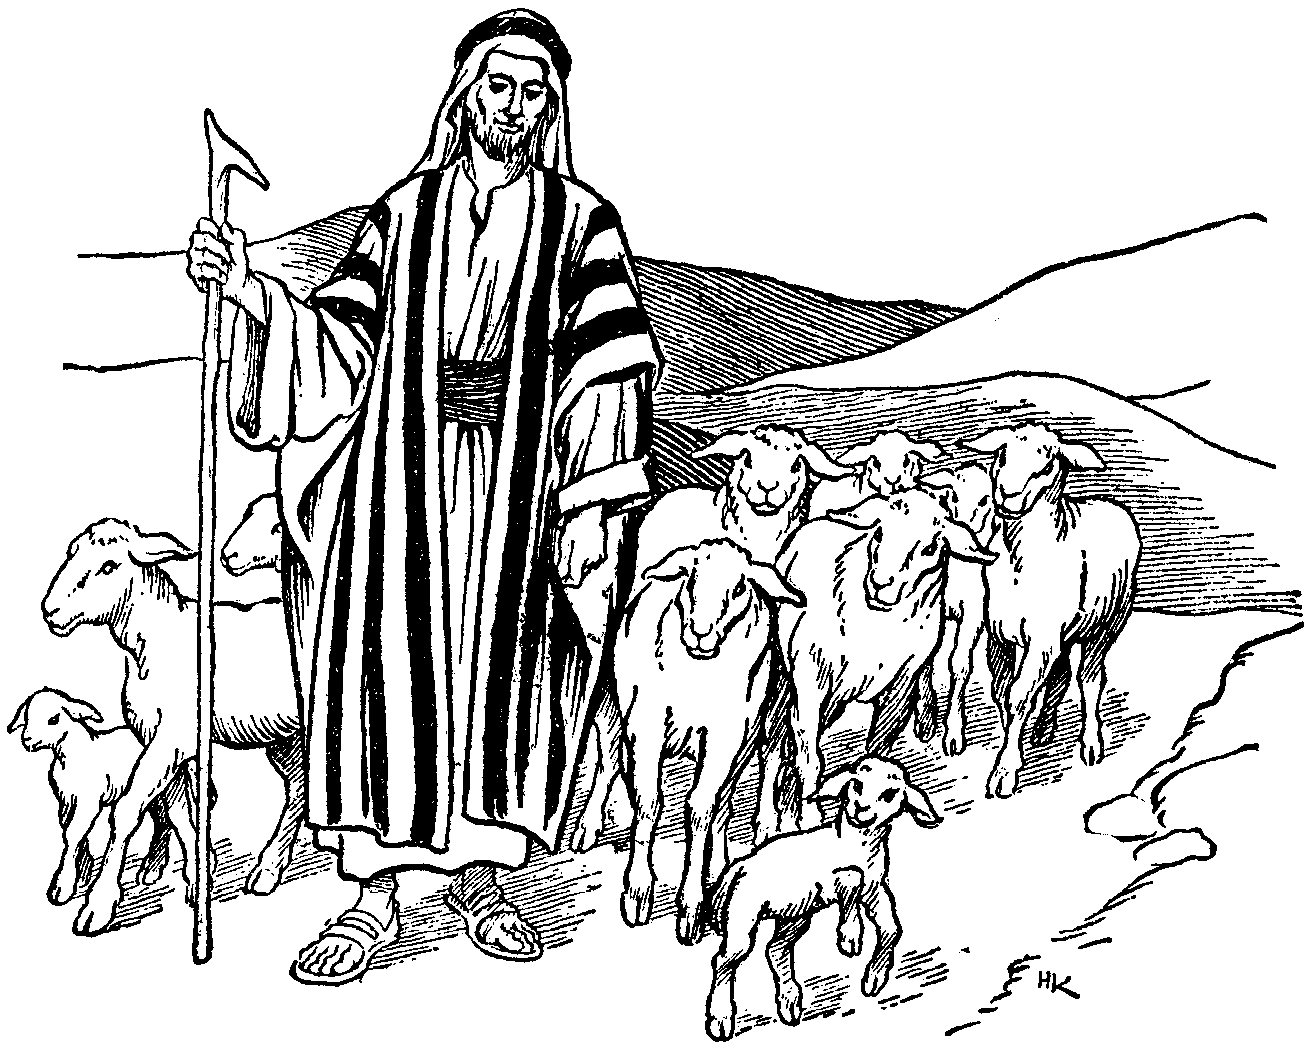 Shepherd, People, Man, Nature